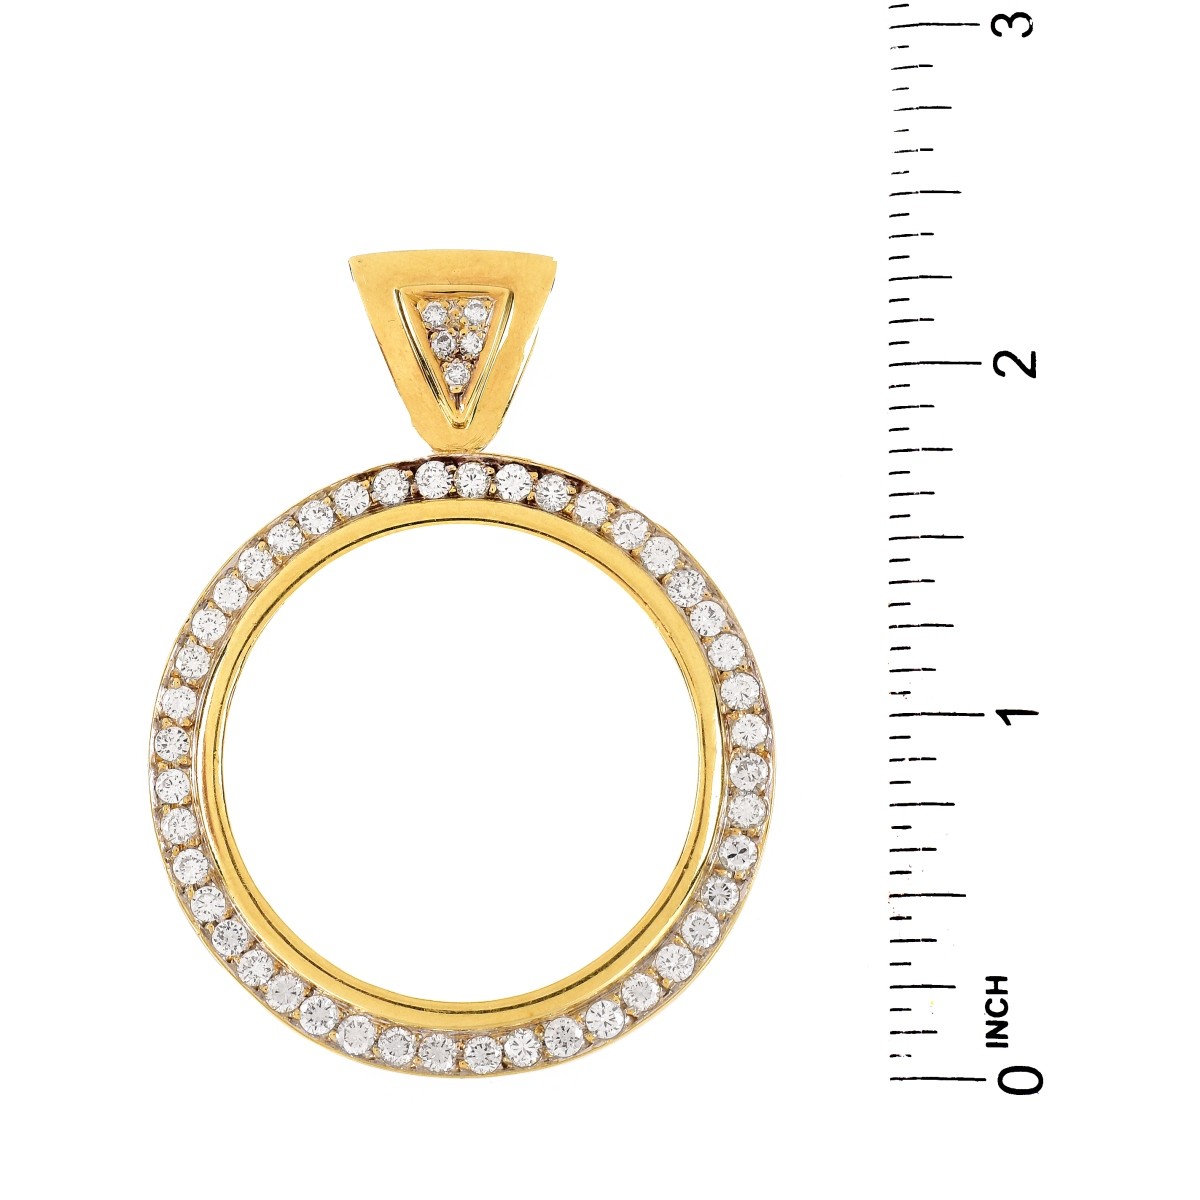 4.0 Carat Diamond and 18K Gold Pendant